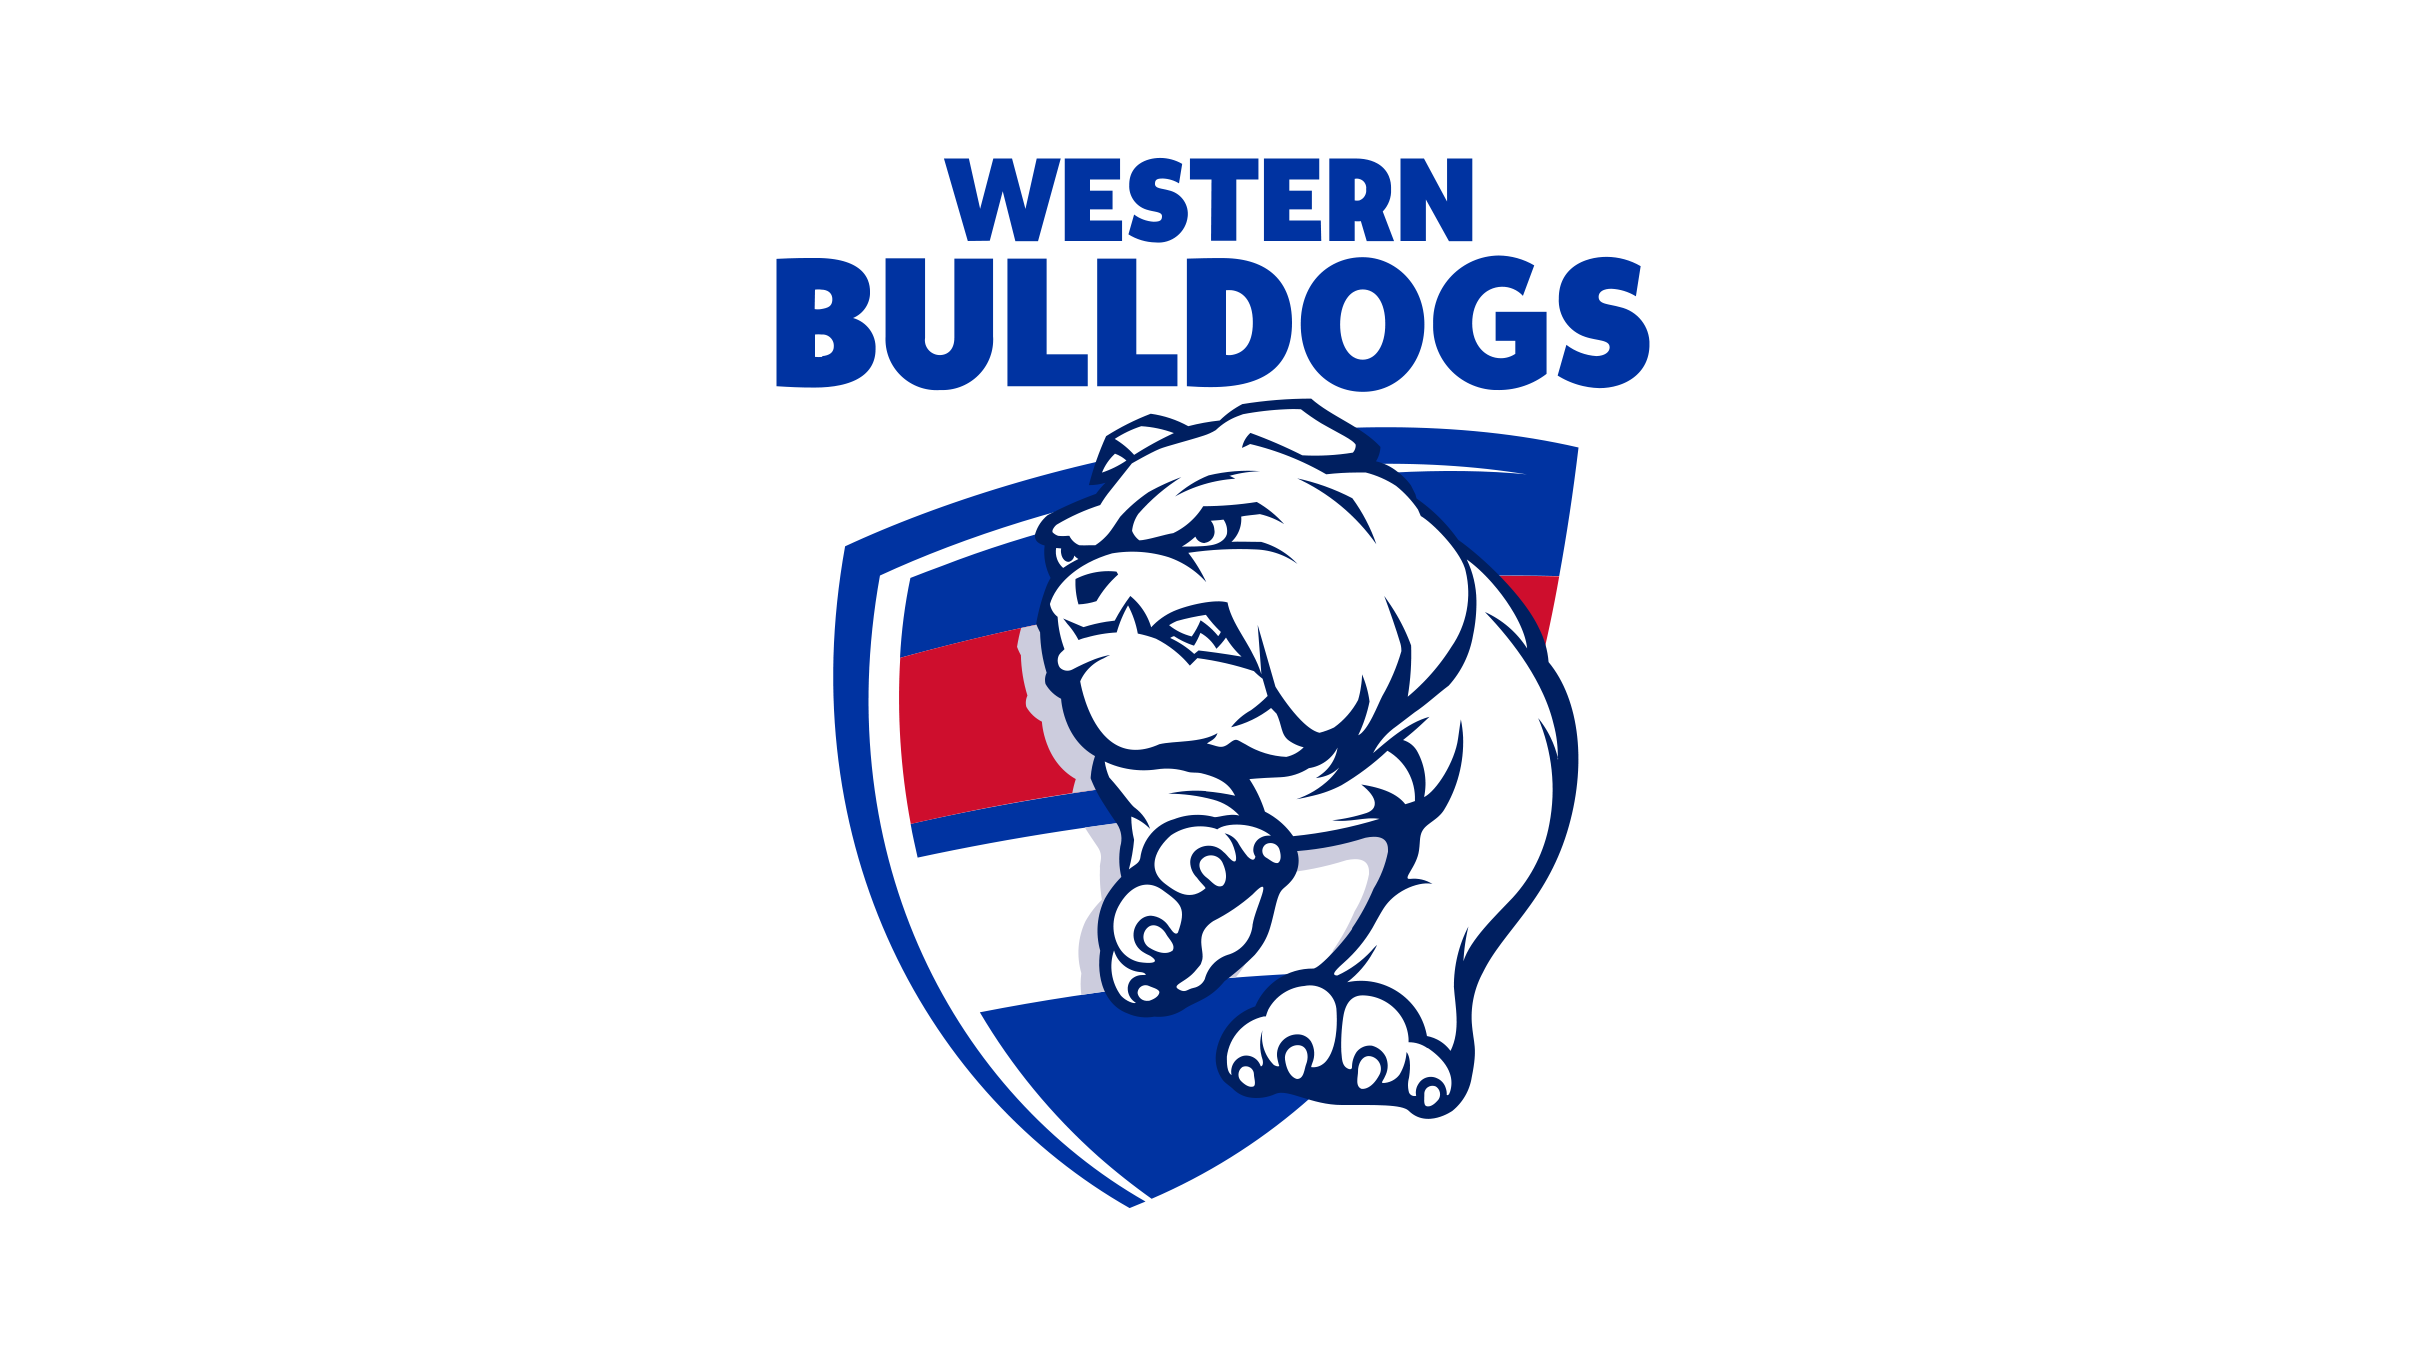 Western Bulldogs v Sydney Swans in Docklands promo photo for Members Onsale presale offer code